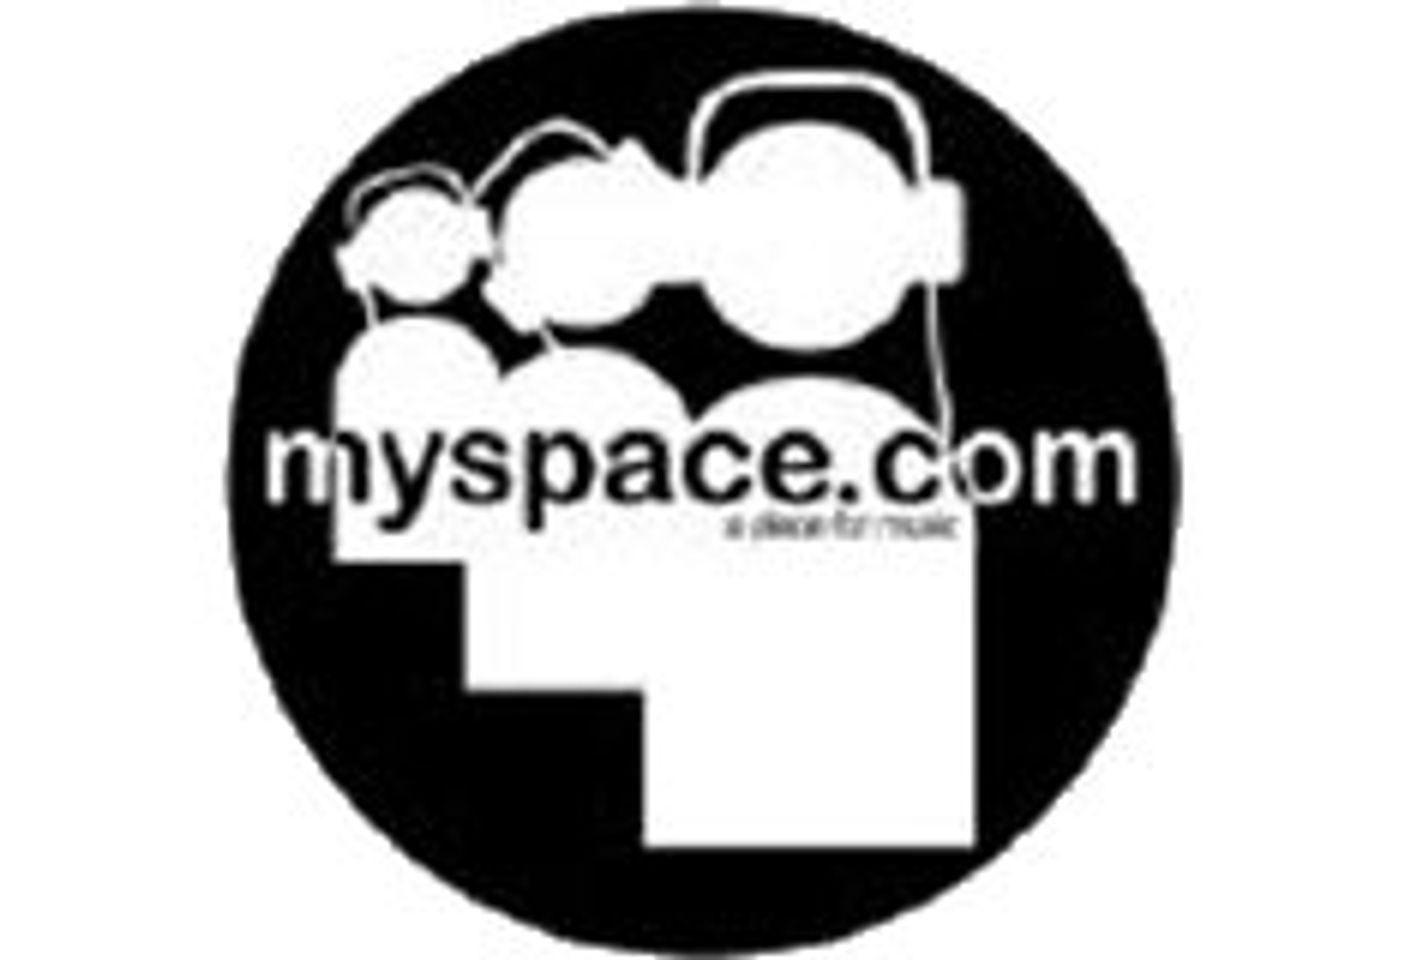 MySpace Looking To Make Website Safe For Children